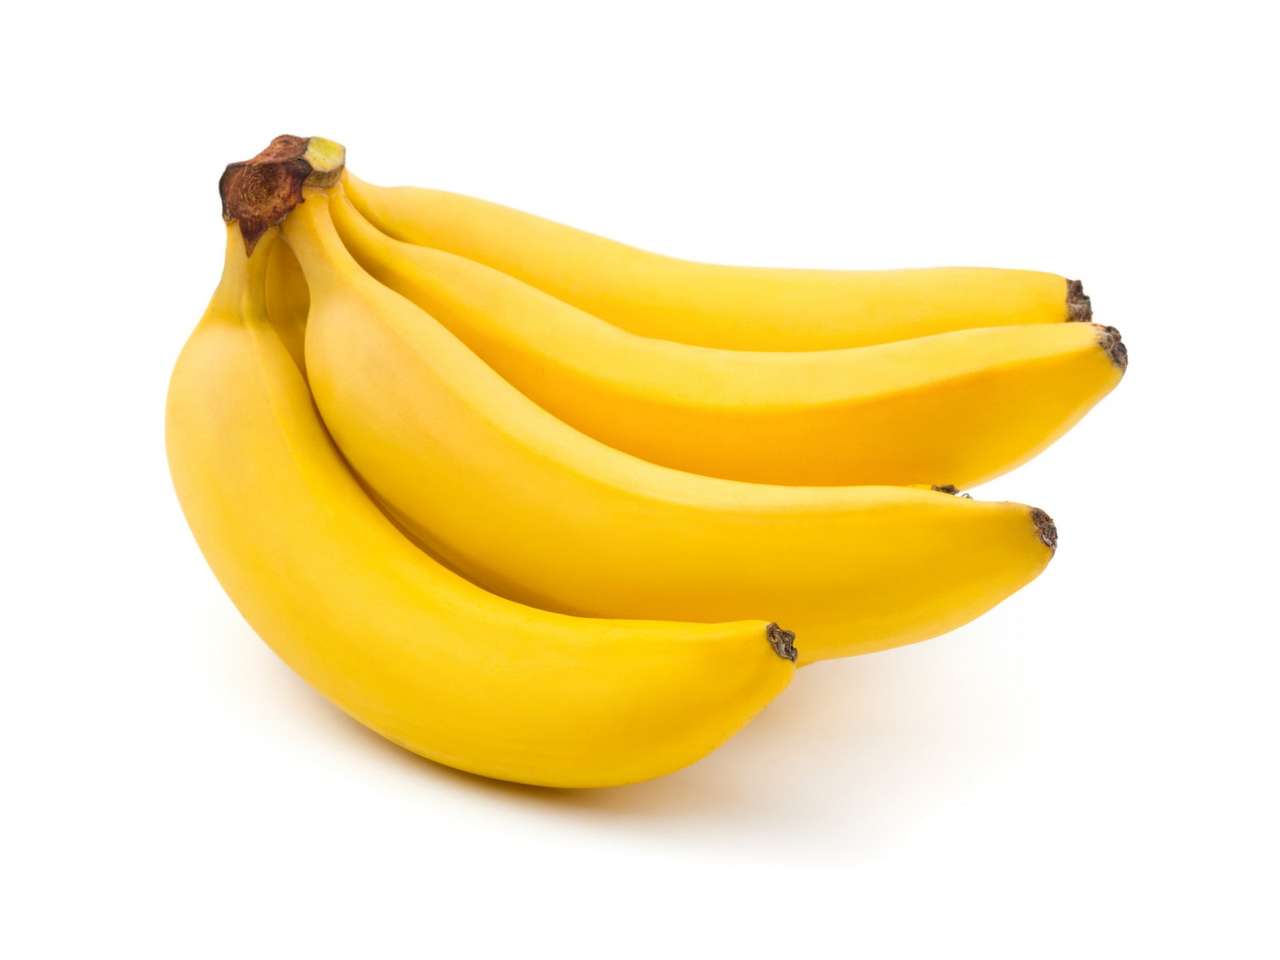 um cacho banana puzzle online